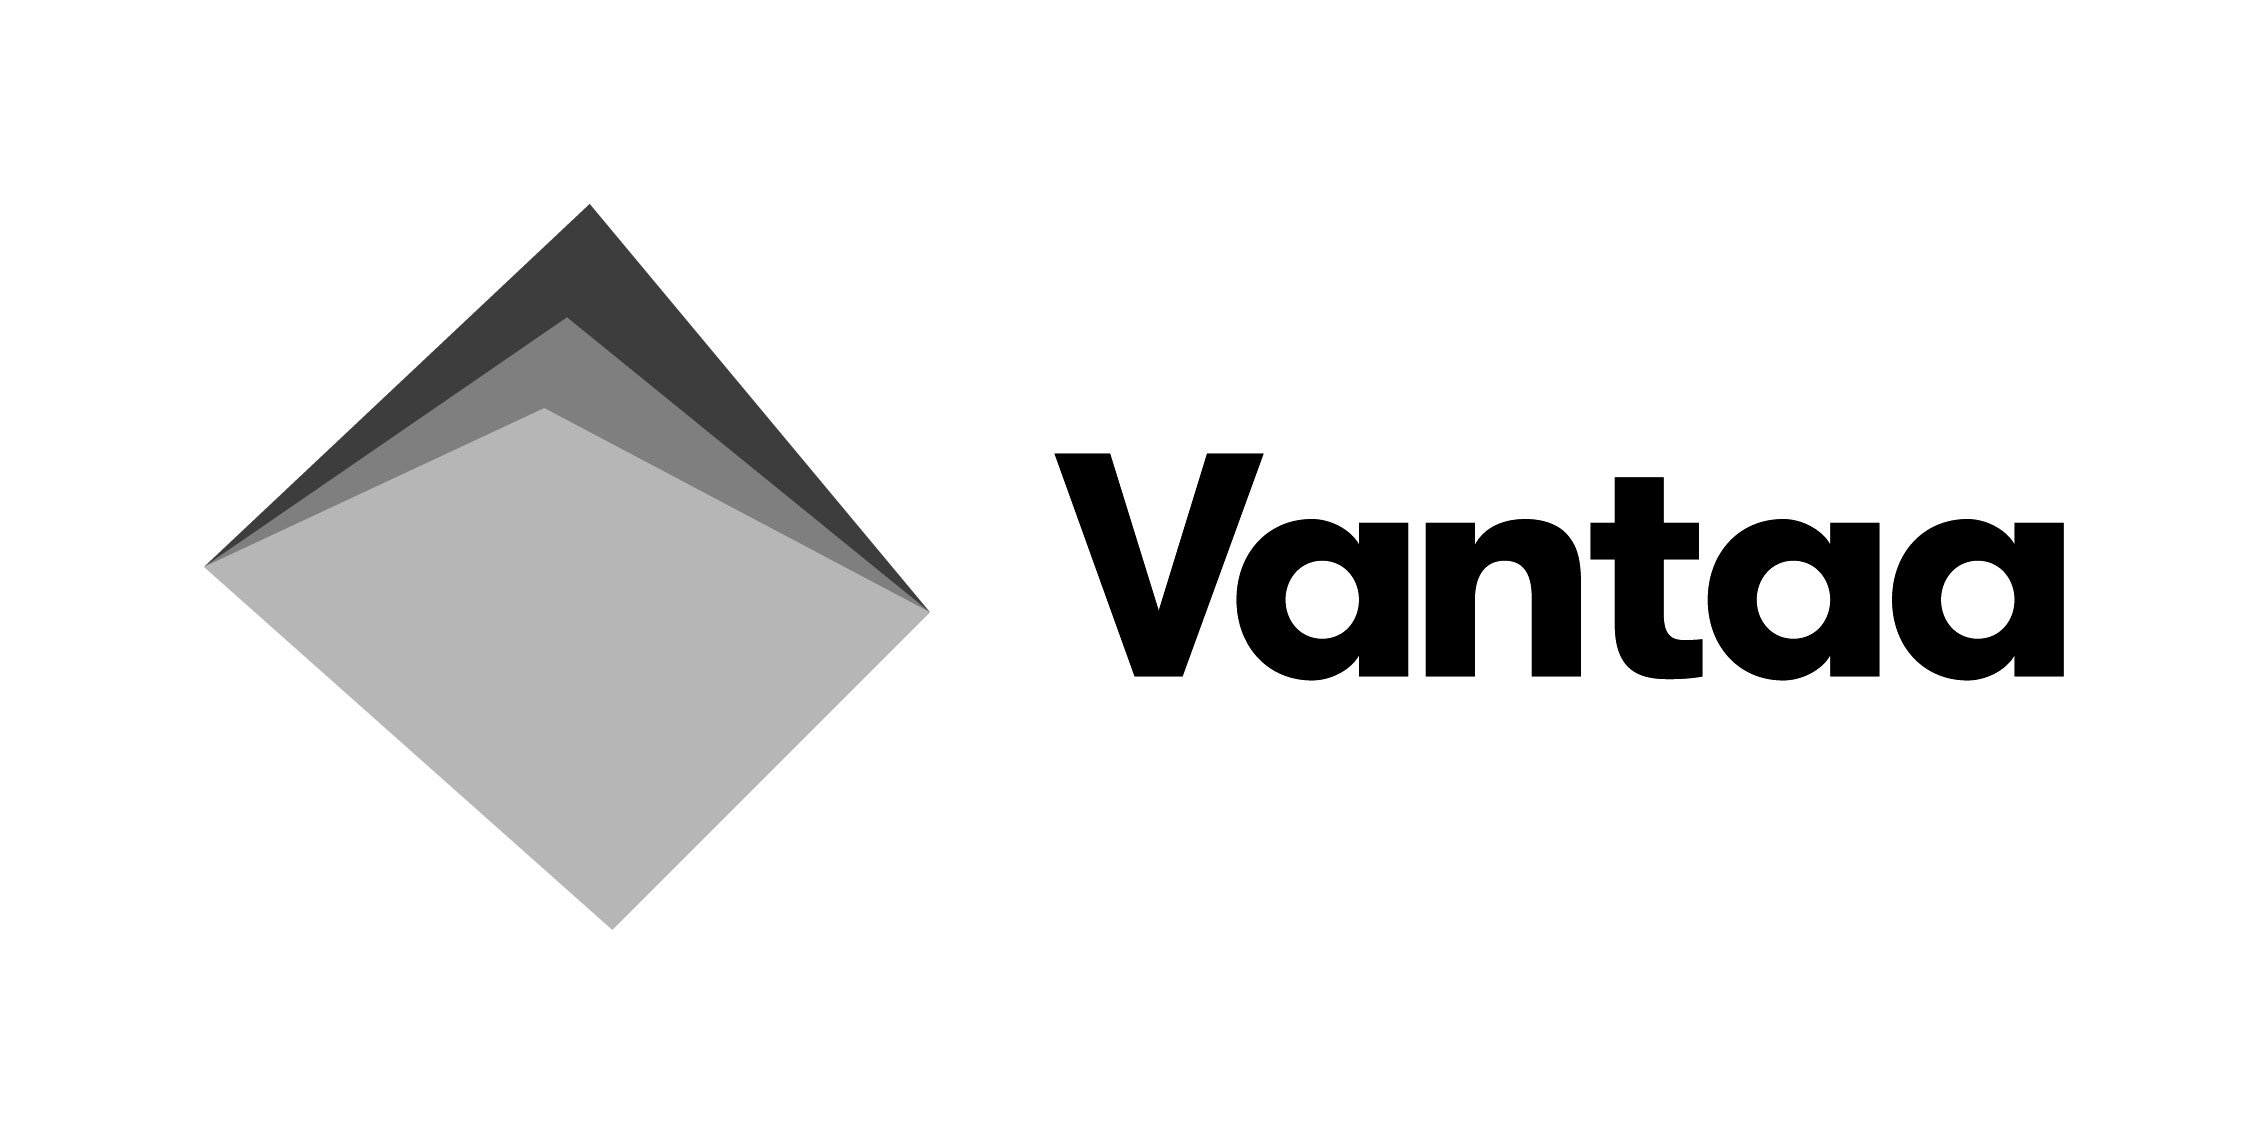 Vantaa_logo.jpg